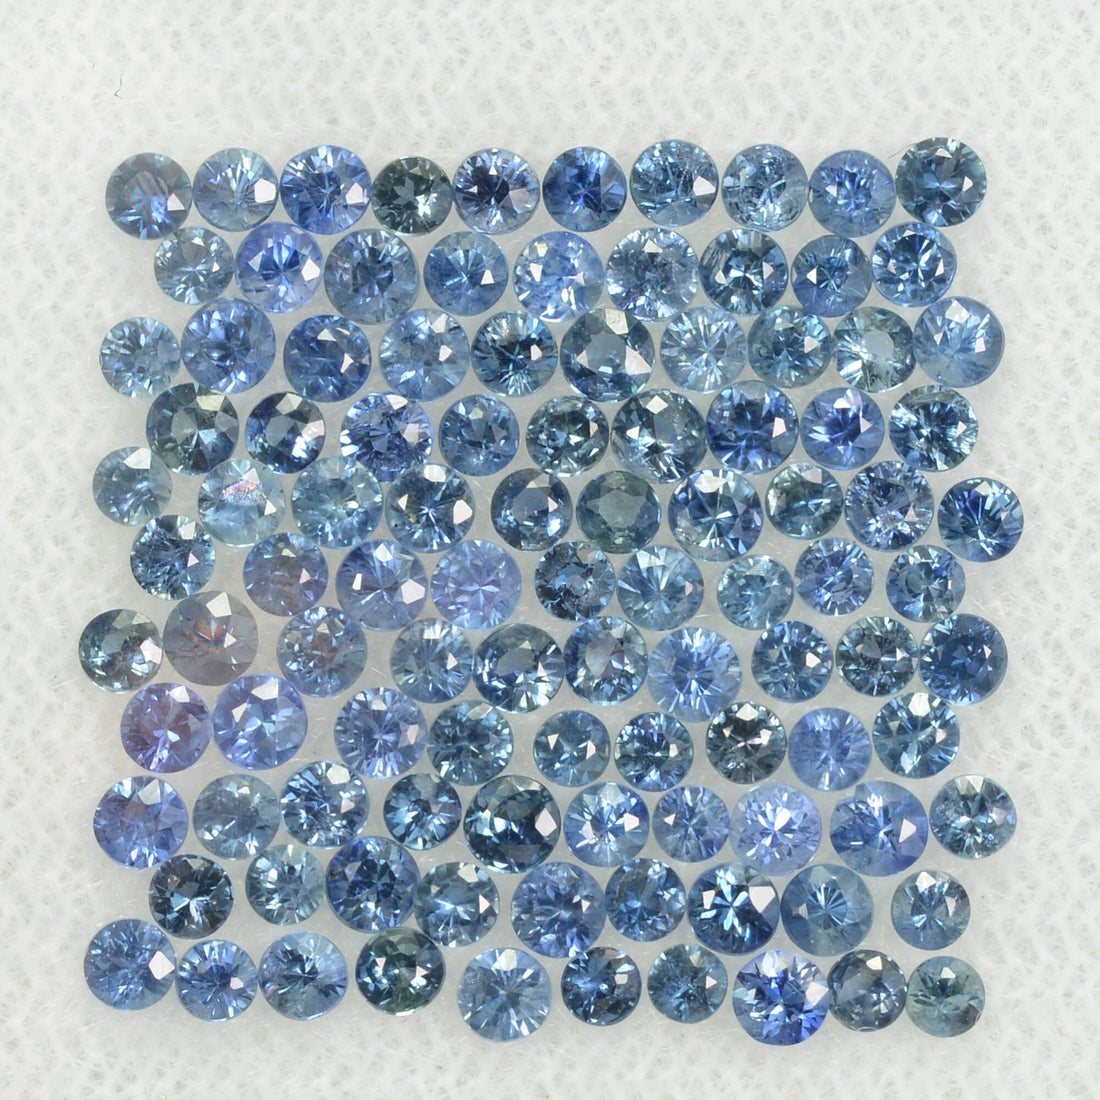 0.8 -3.6 mm Natural Blue Sapphire Loose Gemstone Round Diamond Cut Vs Quality Color